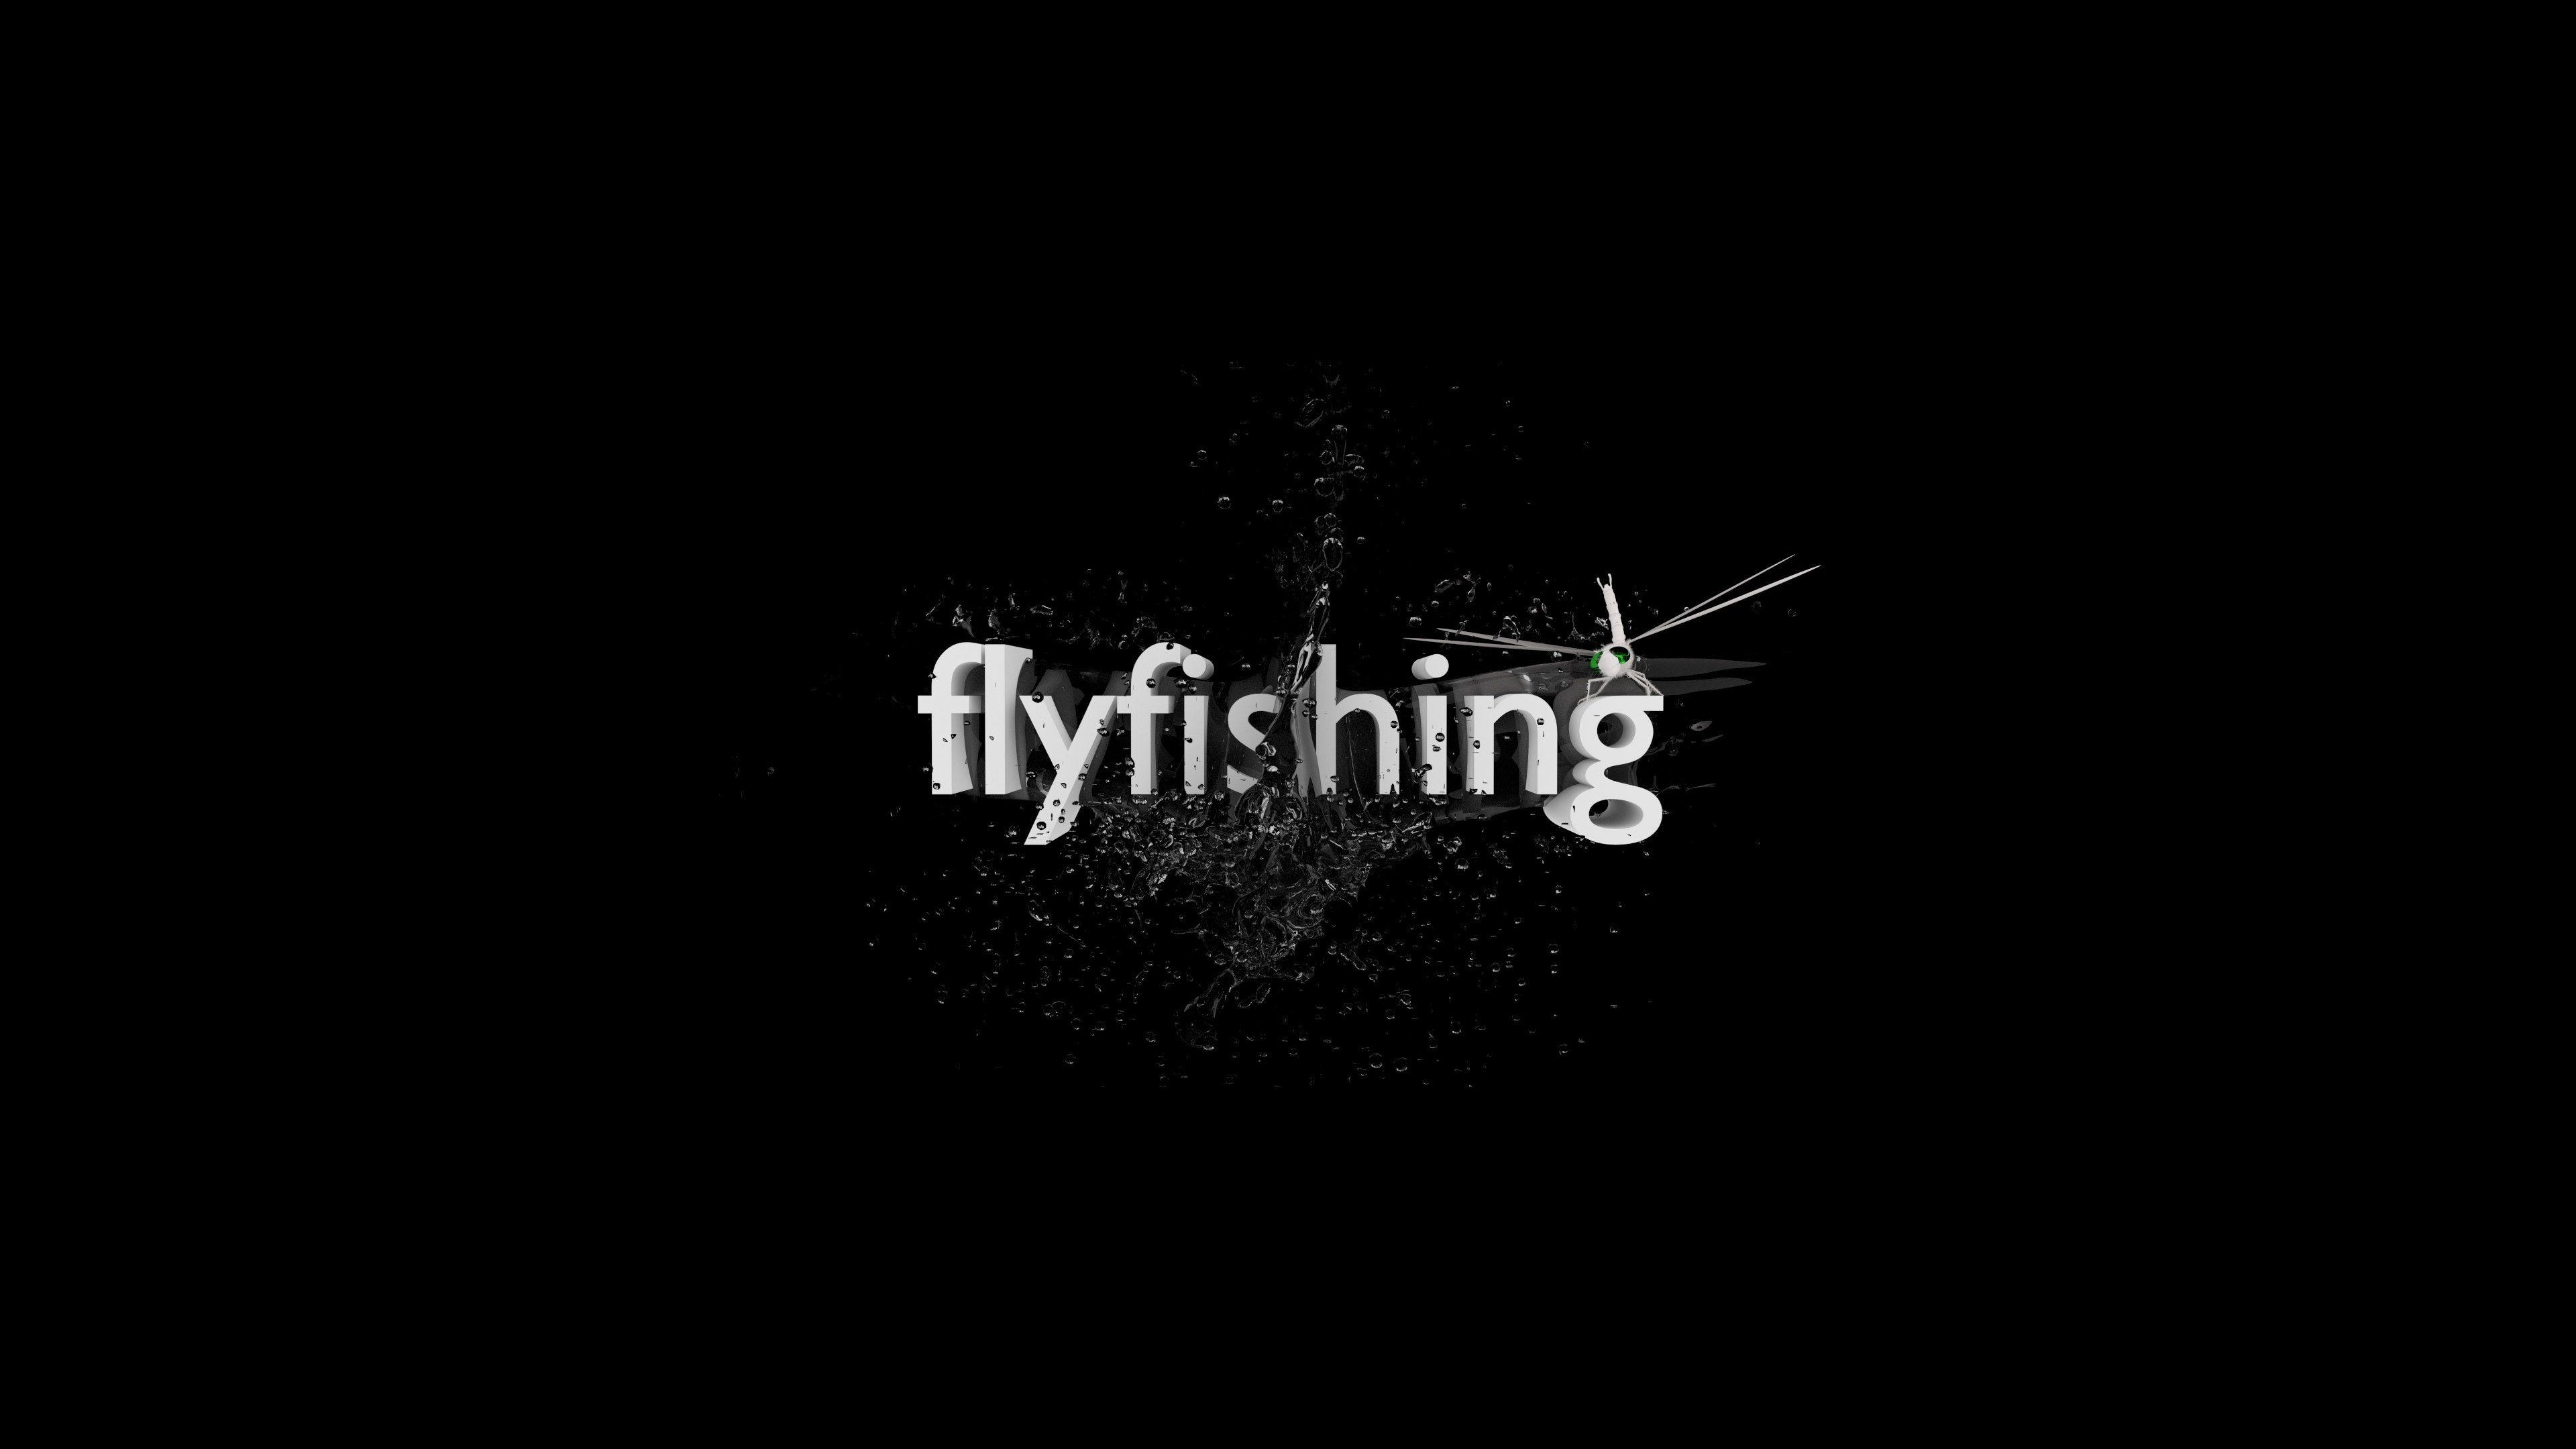 Photoshop Fly Fishing 4k Ultra HD Wallpaper. Background Image